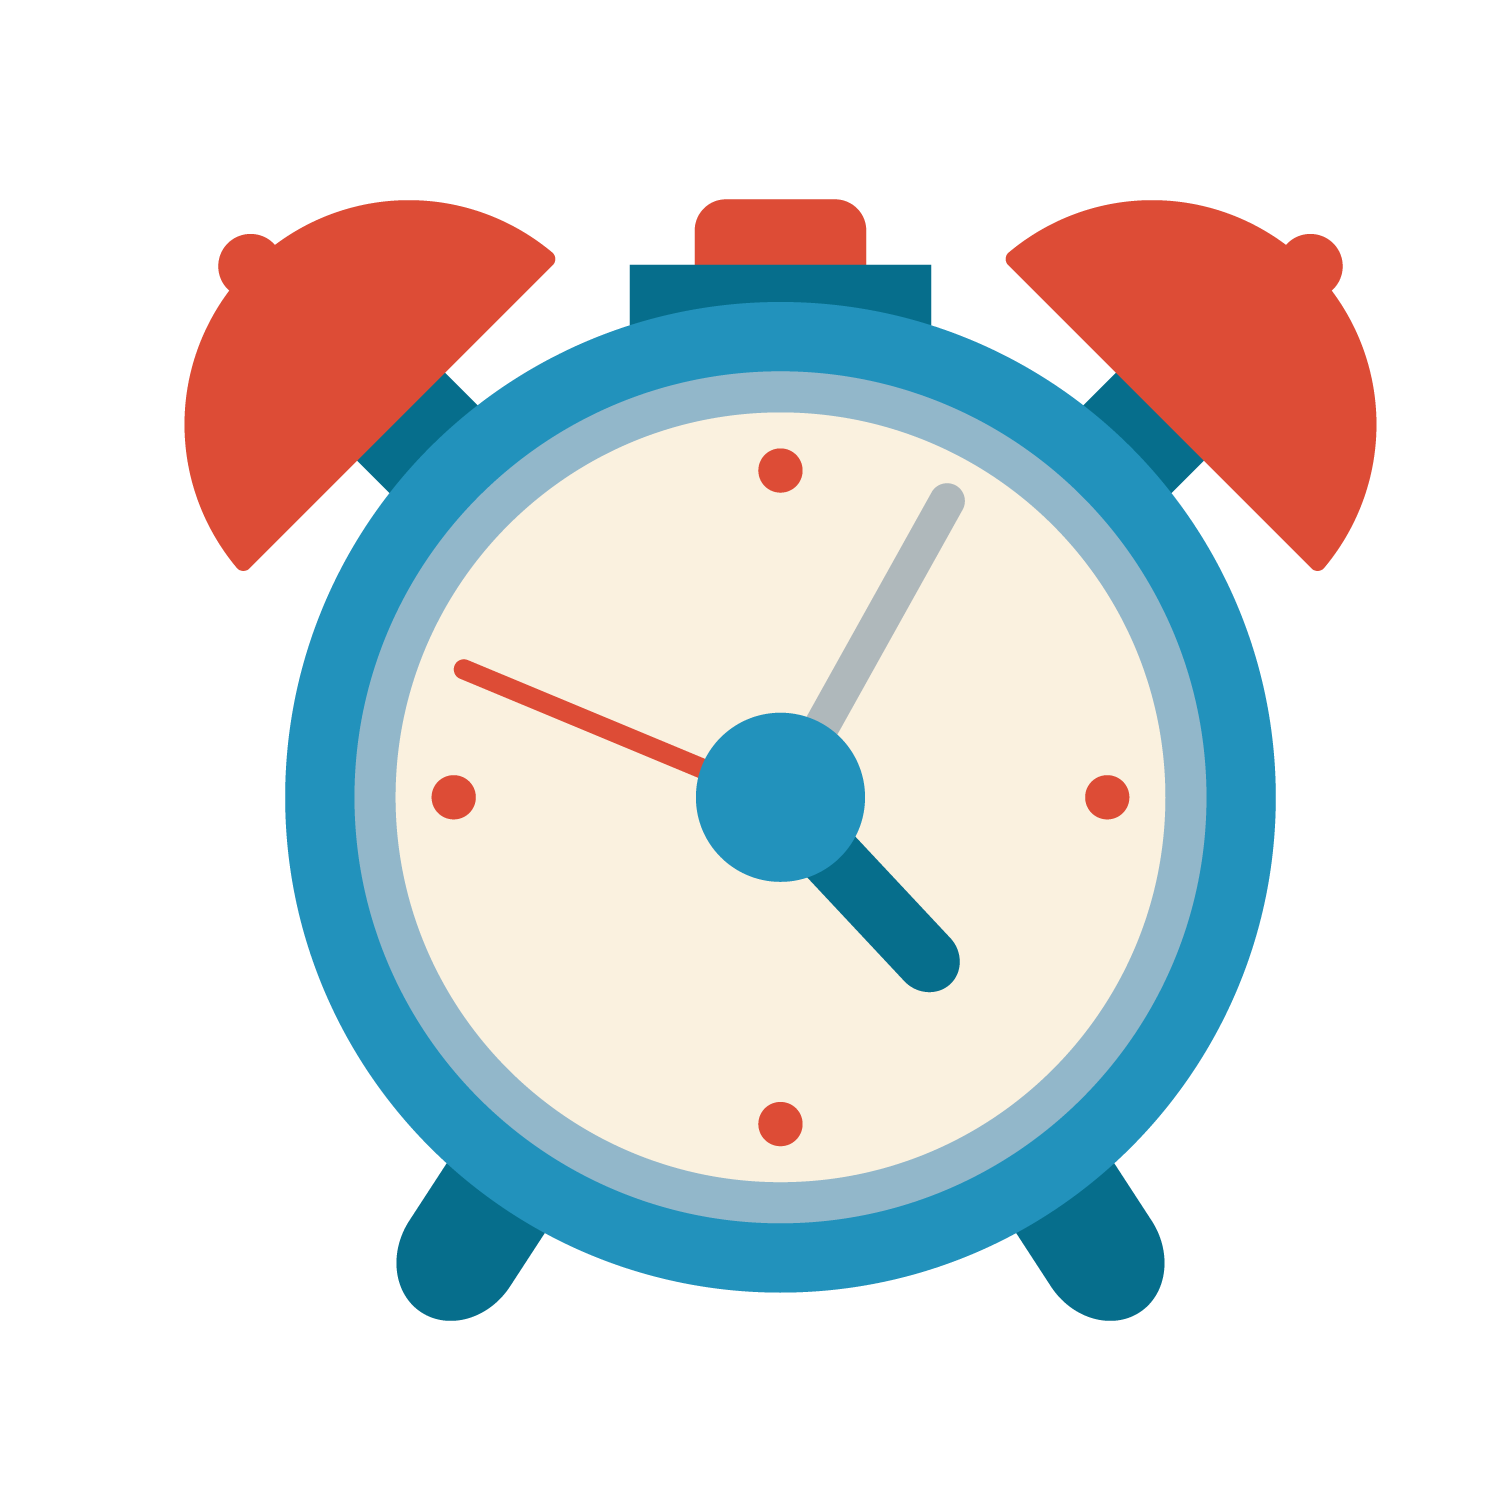 Download Alarm Area Timer Clock Free HQ Image HQ PNG Image ...